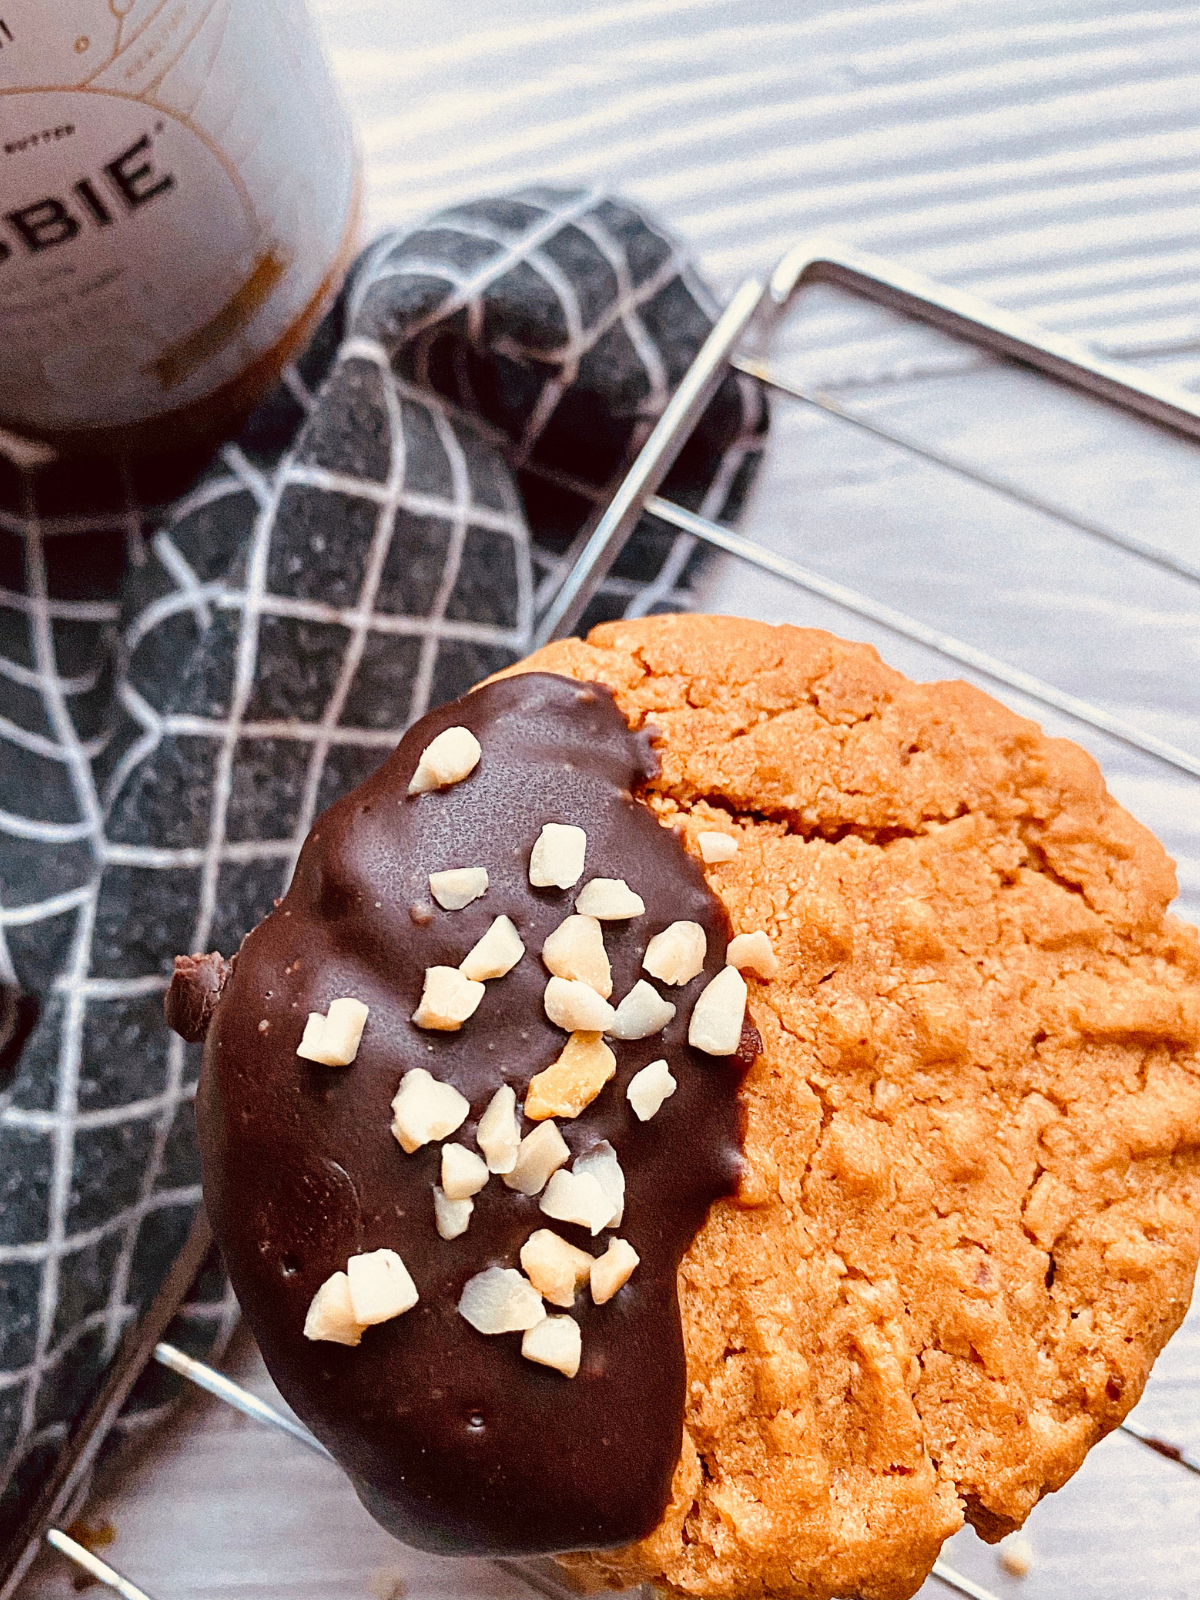 JOBBIE Peanut Butter Cookies with Chocolate Ganache Dip